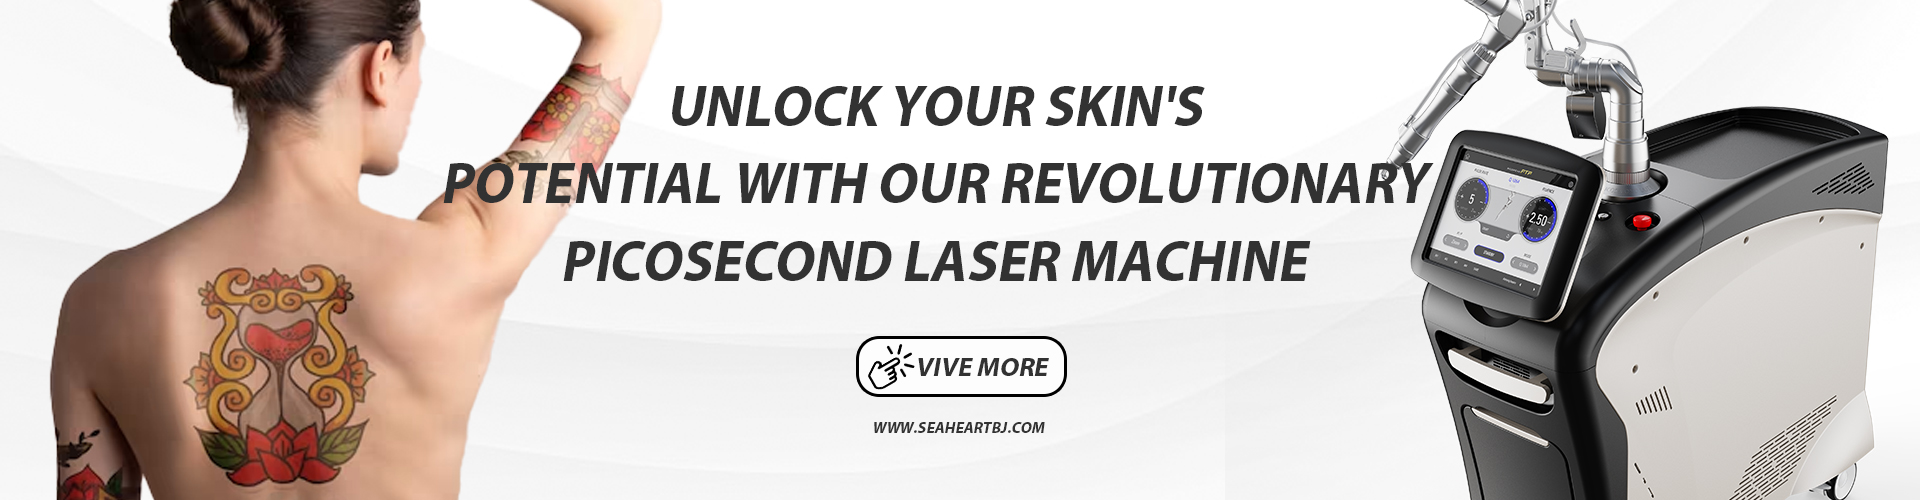 professional laser tattoo removal machine